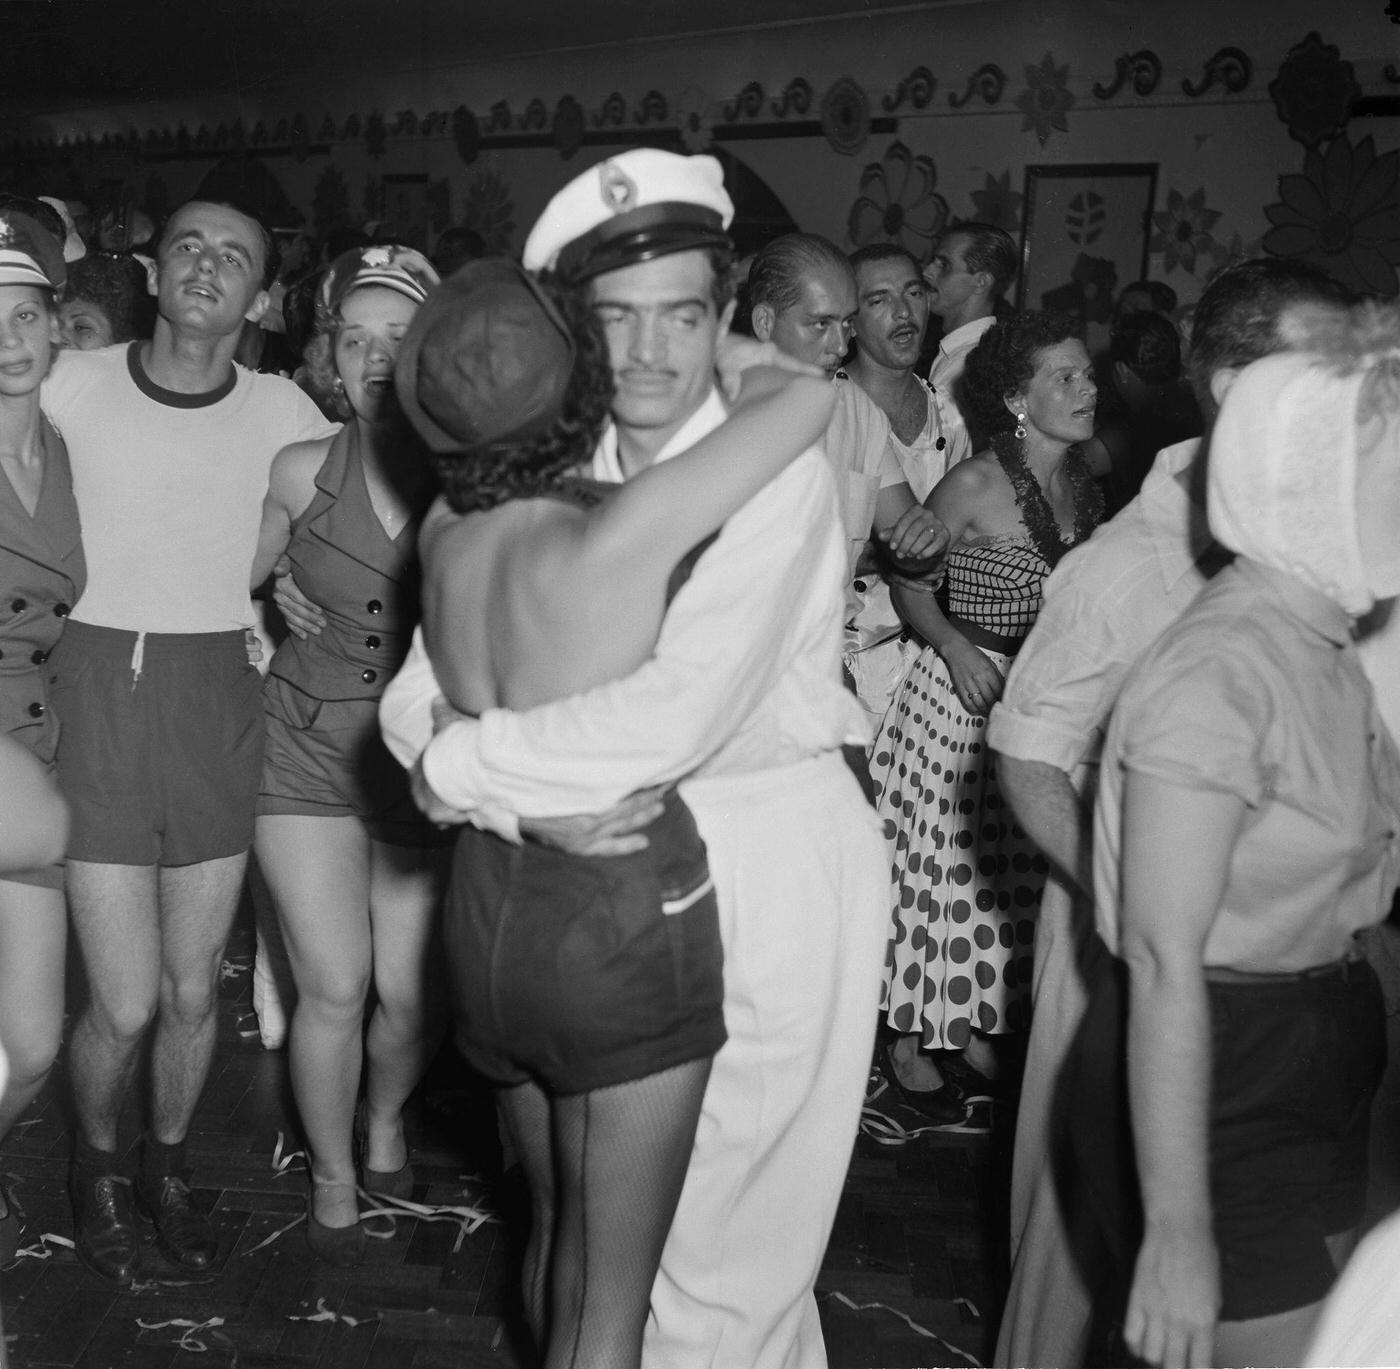 Costumed Posers, Rio Carnival 1953